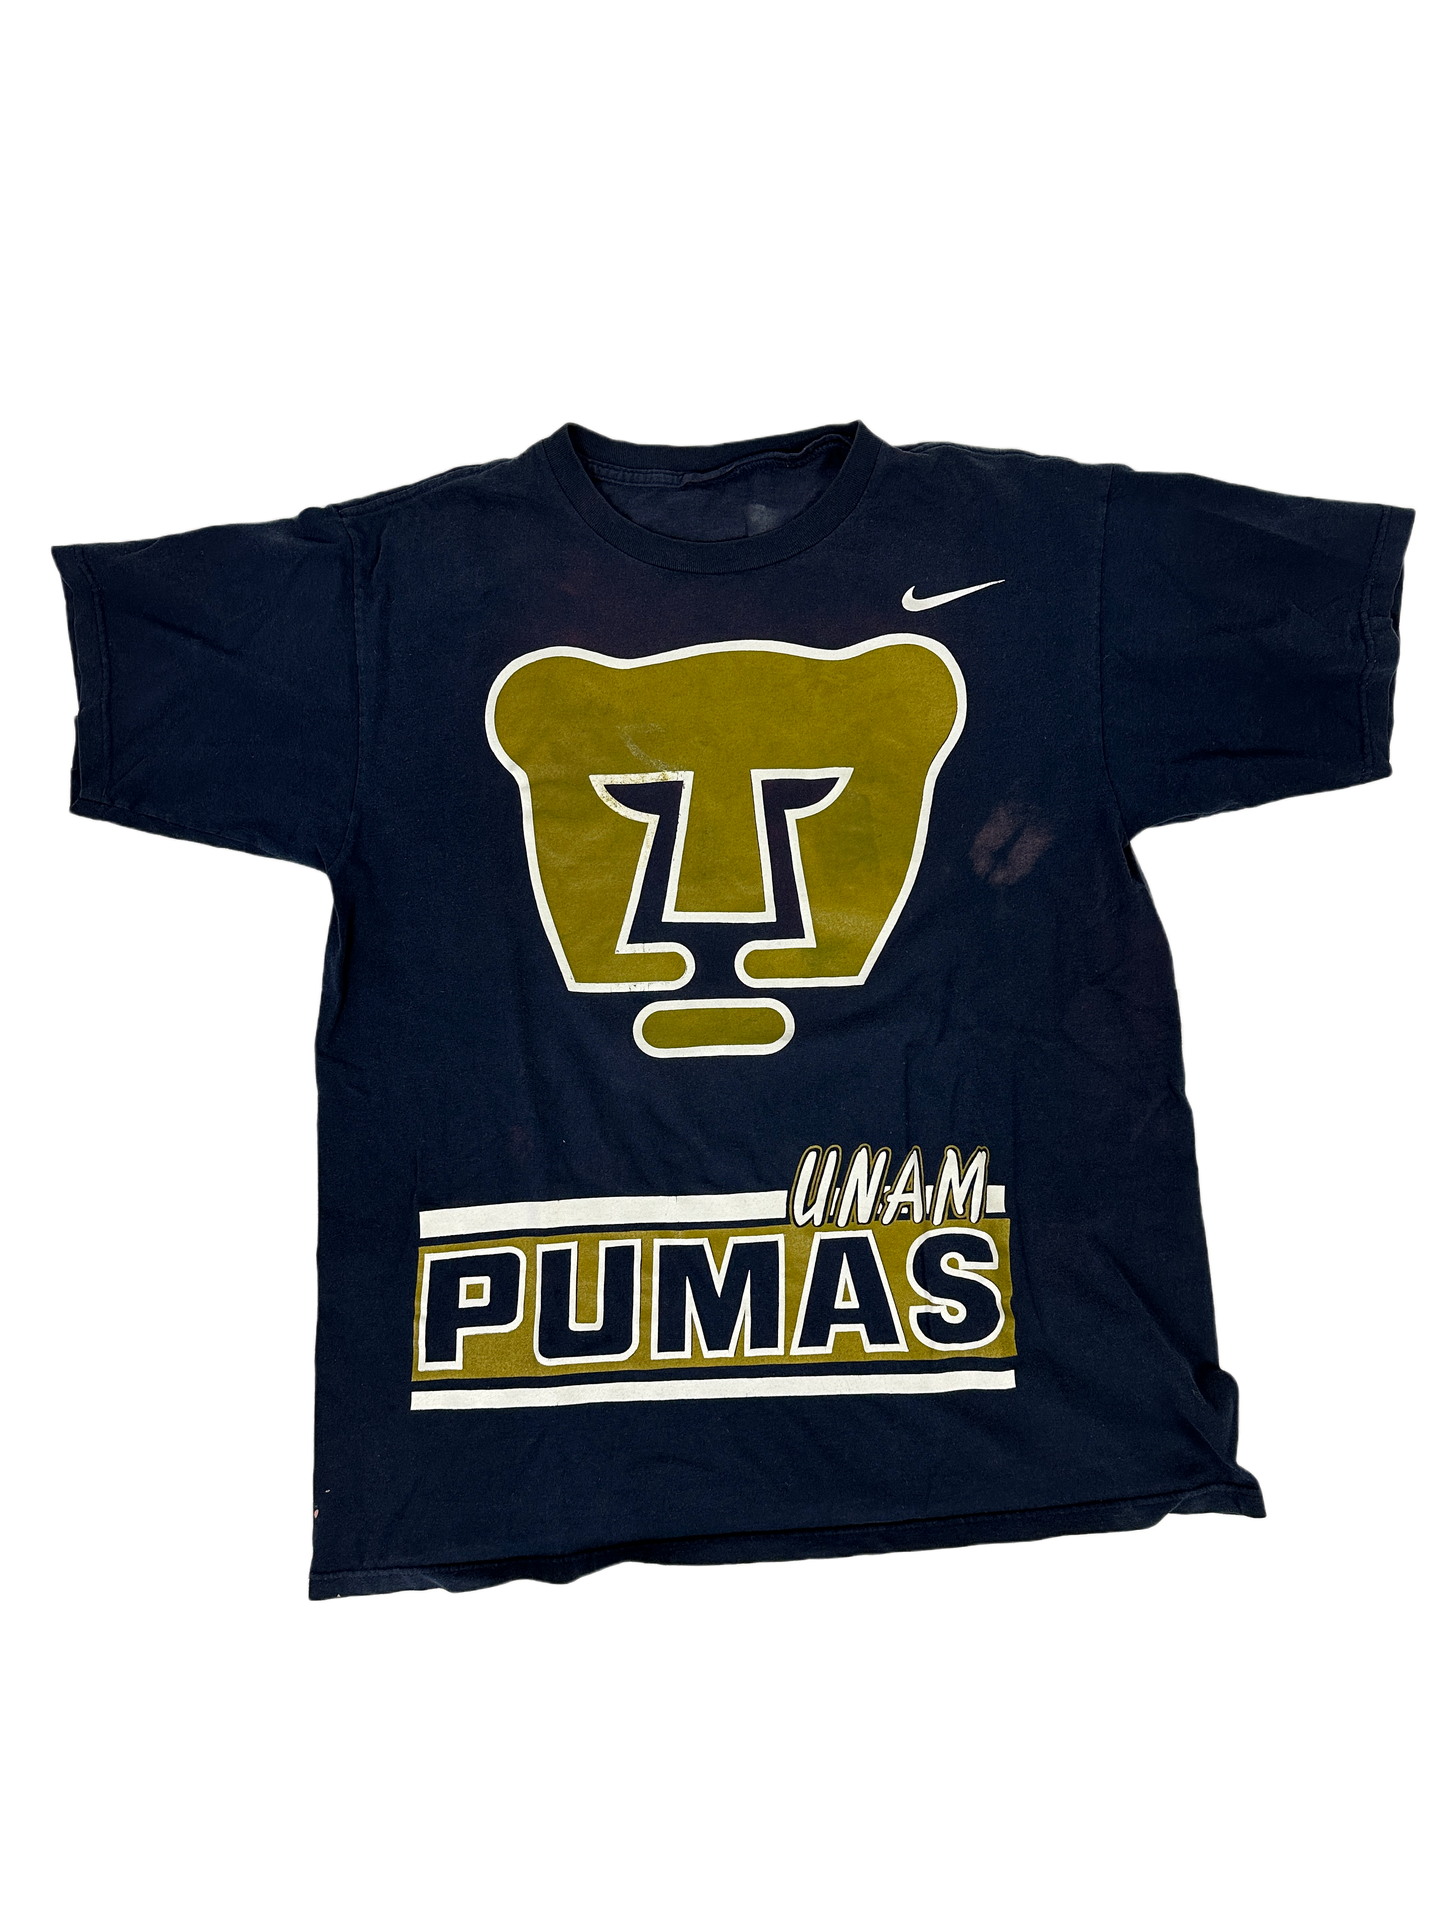 Playera UNAM Pumas Vintage - L